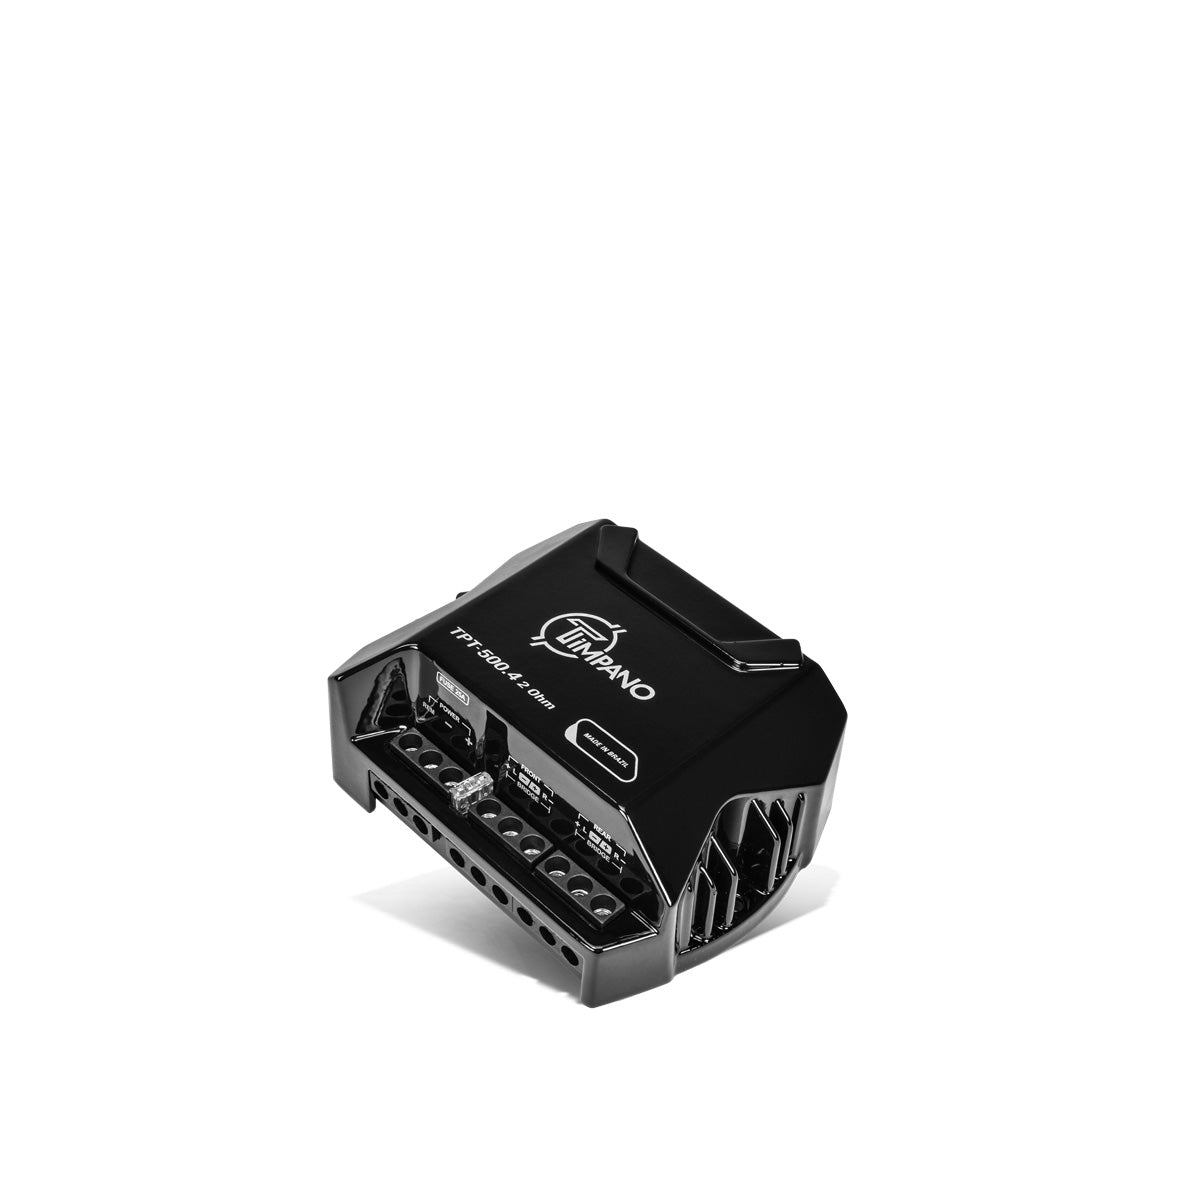 Timpano Compact 4 Channel TPT500.4 Car Audio Amplifier